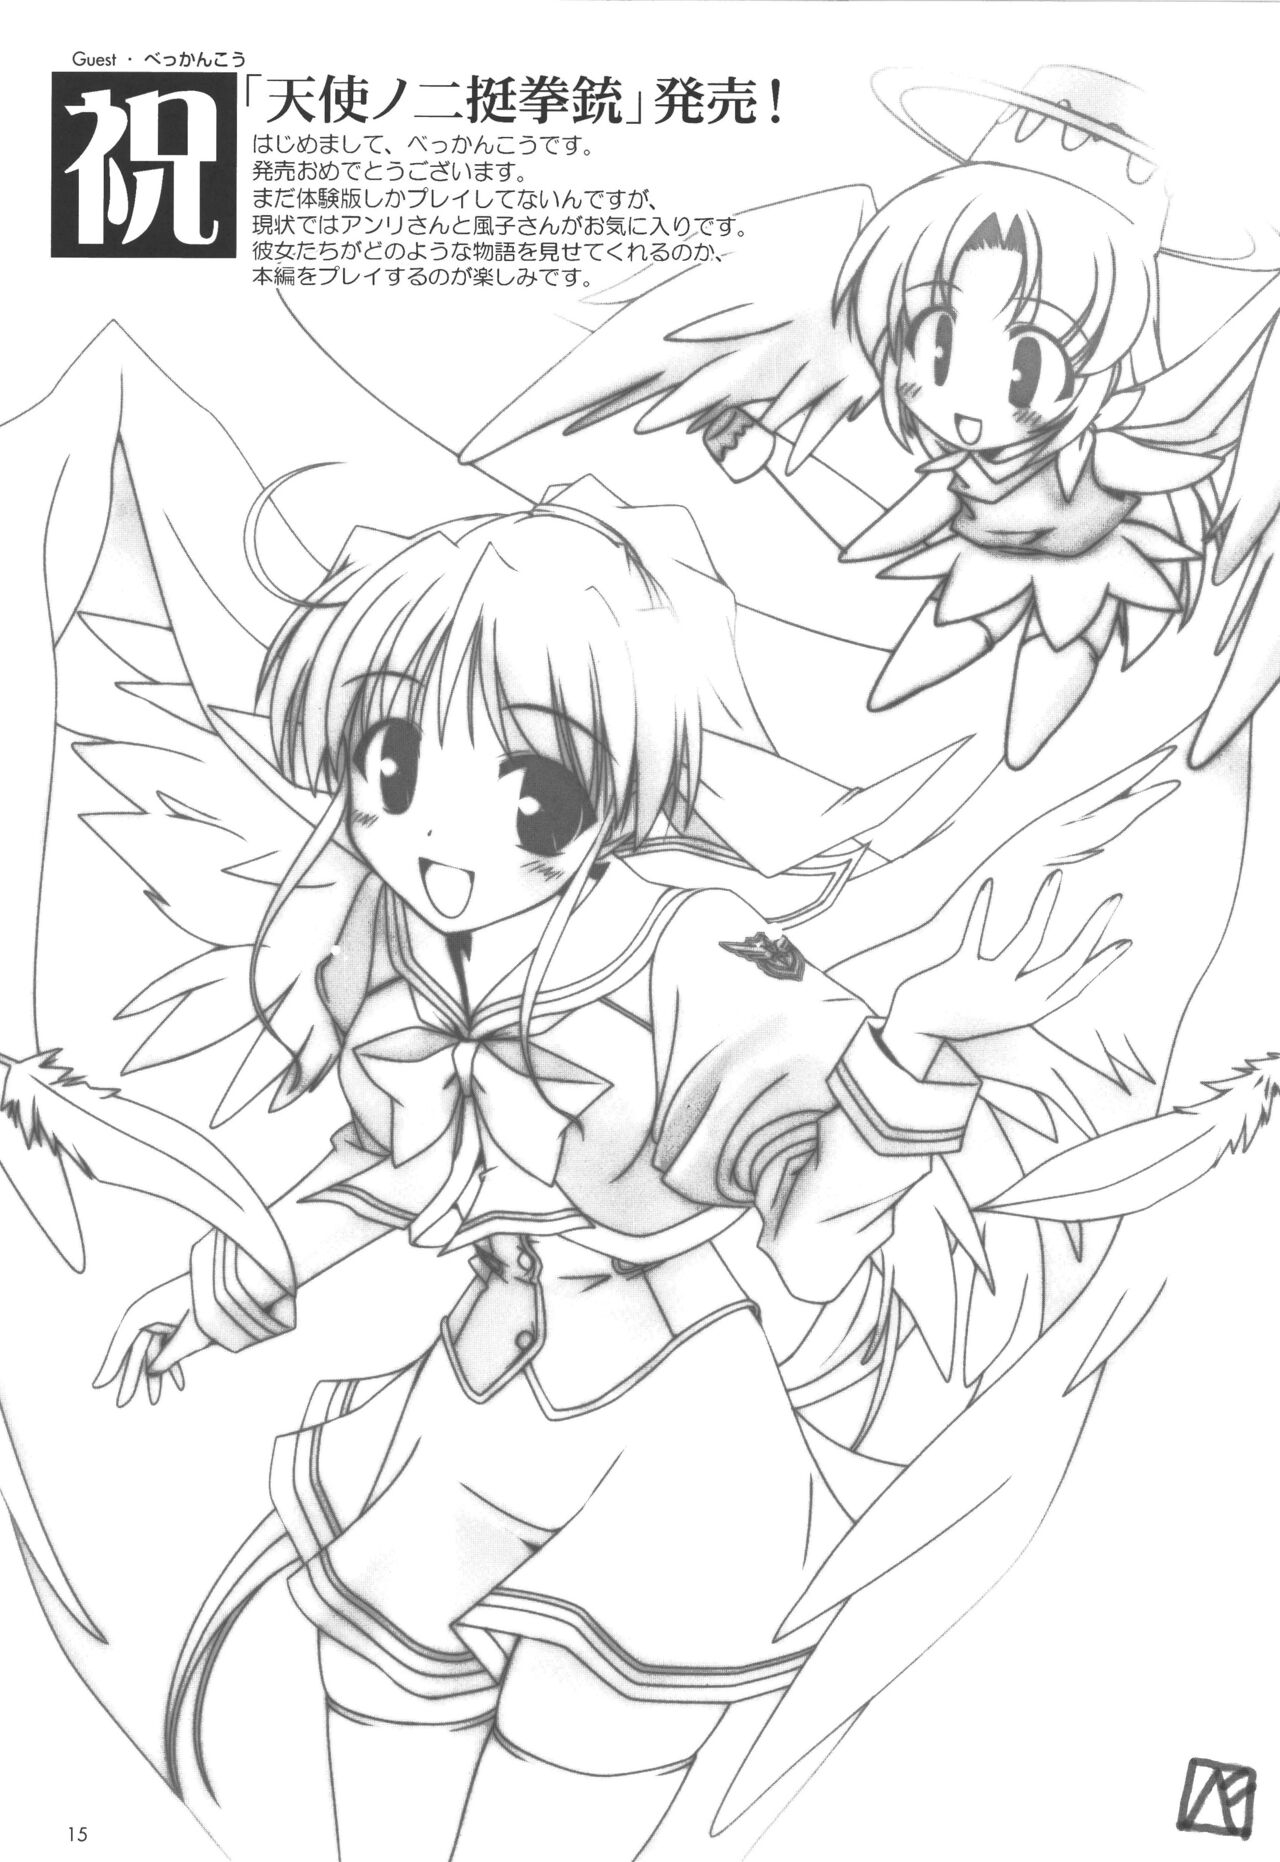 Gathering of Angels : Tenshi no Nichou Kenjuu -Angelos Armas- 15